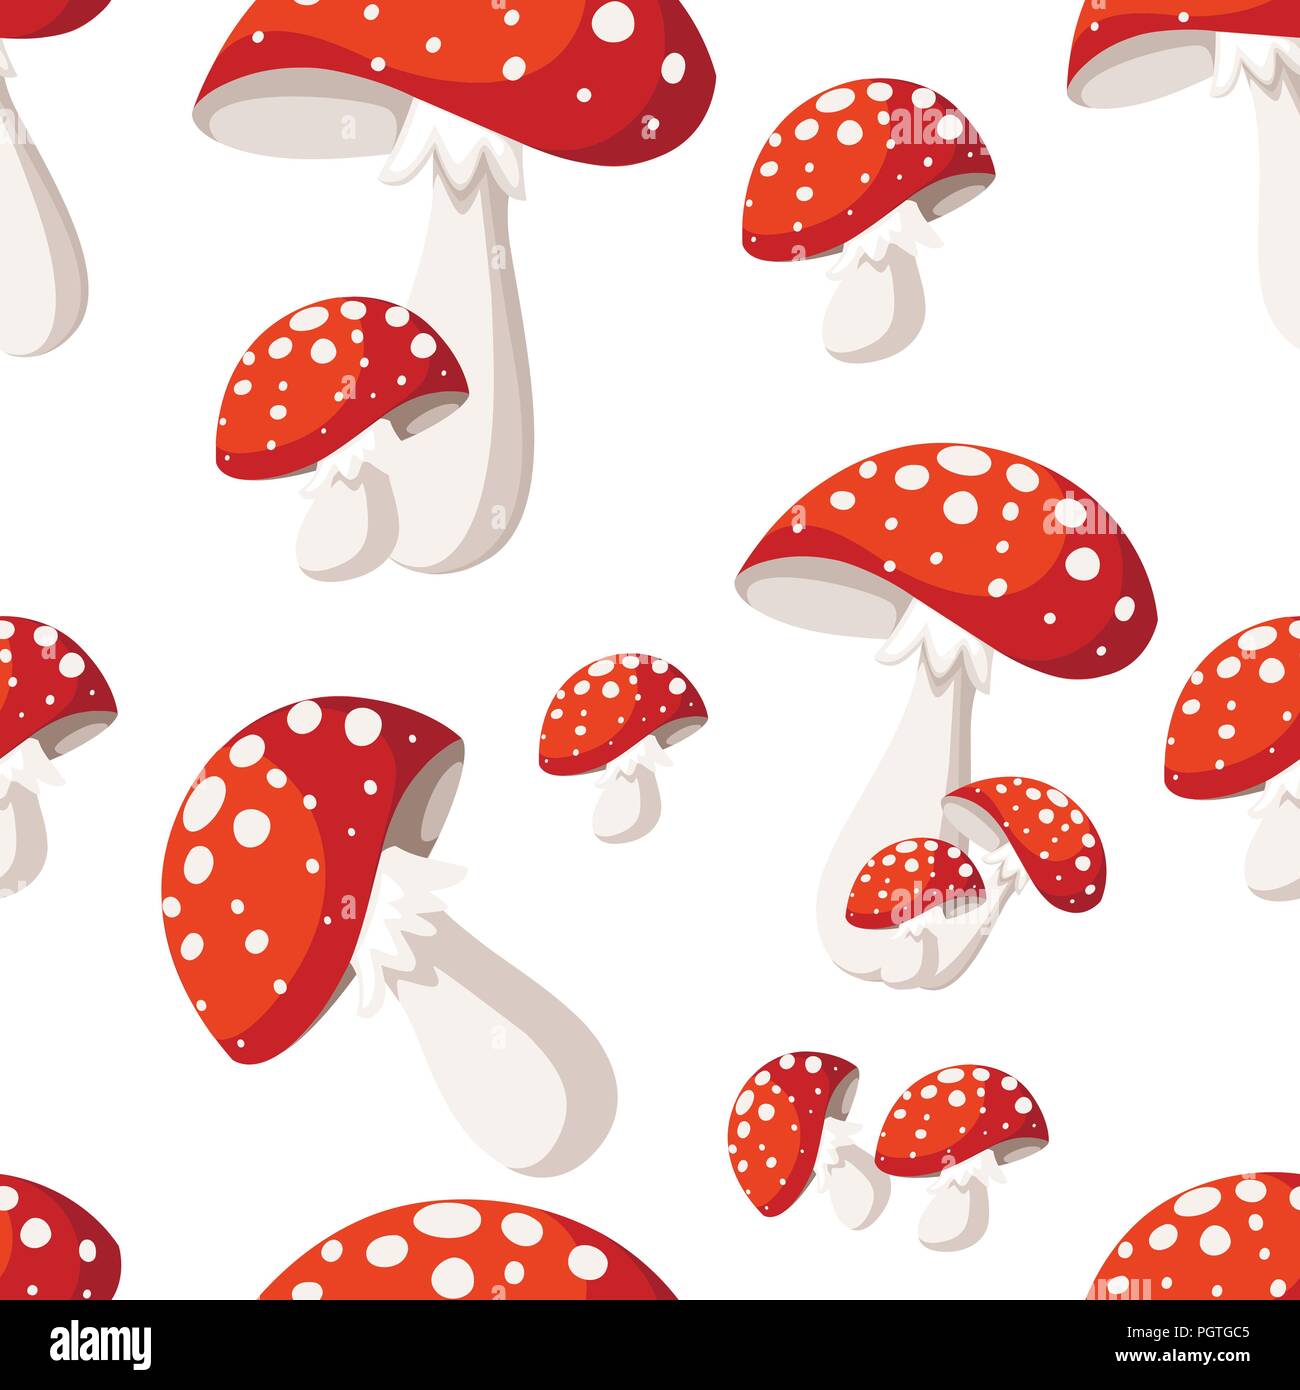 Seamless pattern. Amanita muscaria mushroom cartoon style. Flat vector illustration on white background. Stock Vector